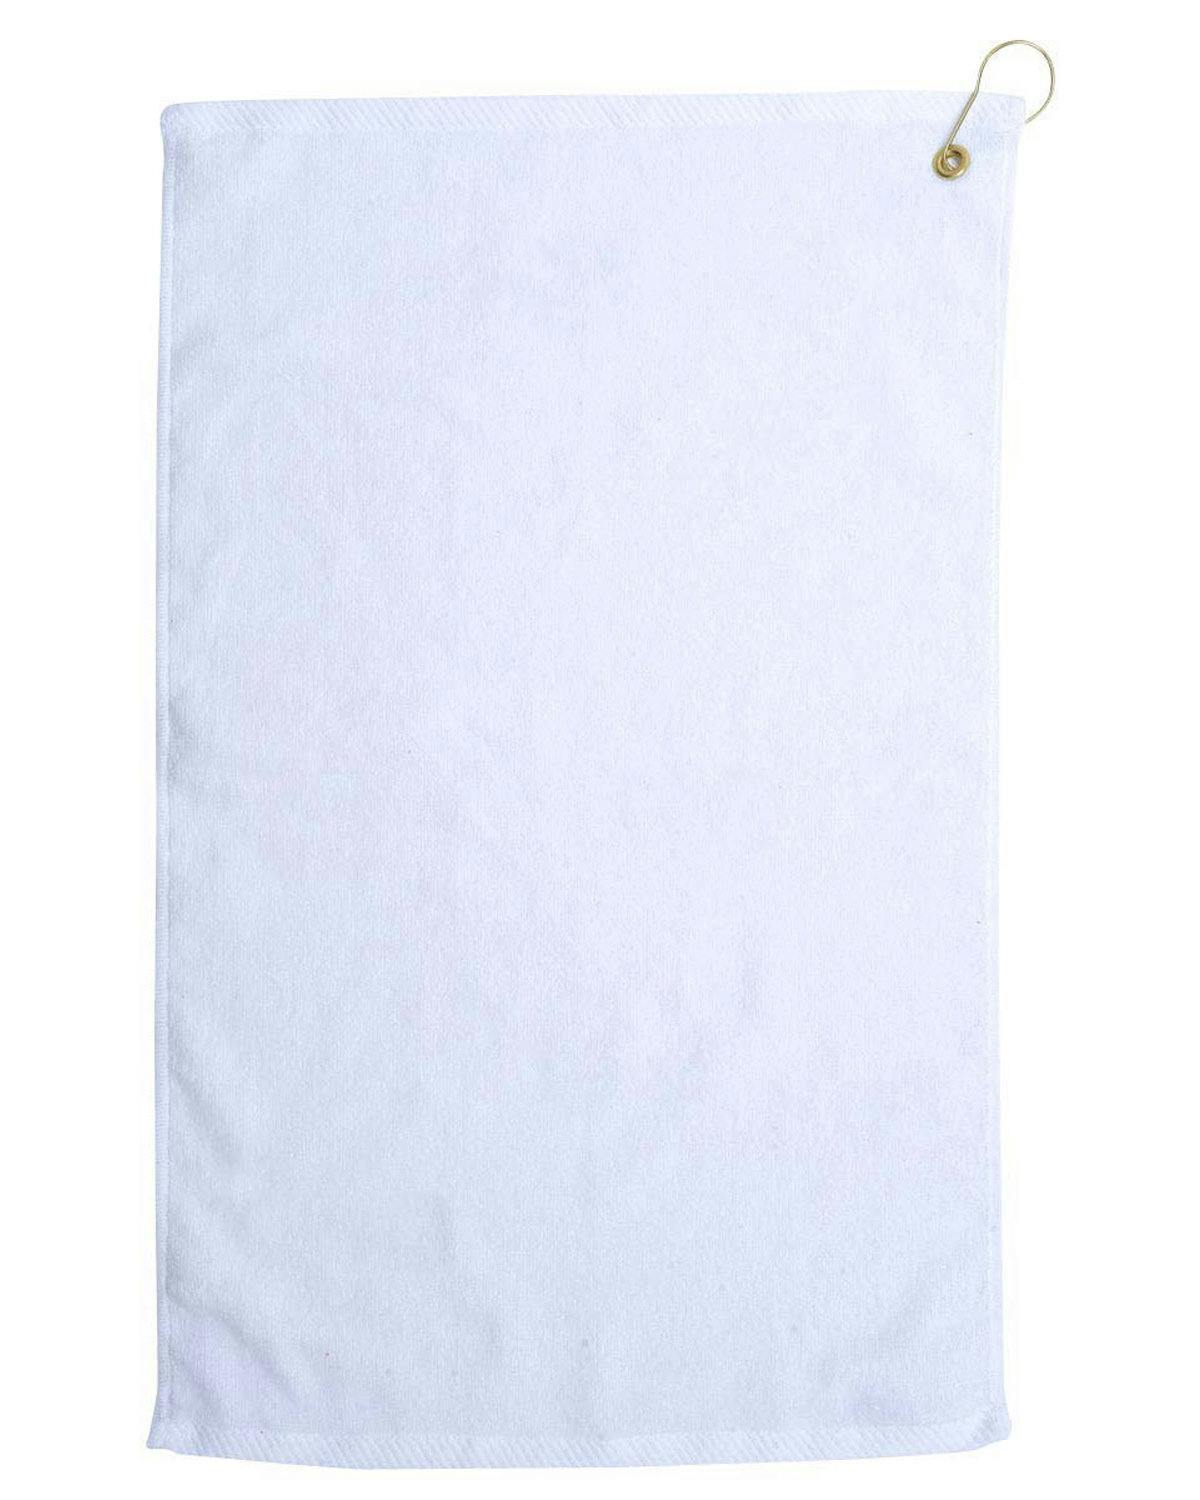 Image for Diamond Collection Golf Towel